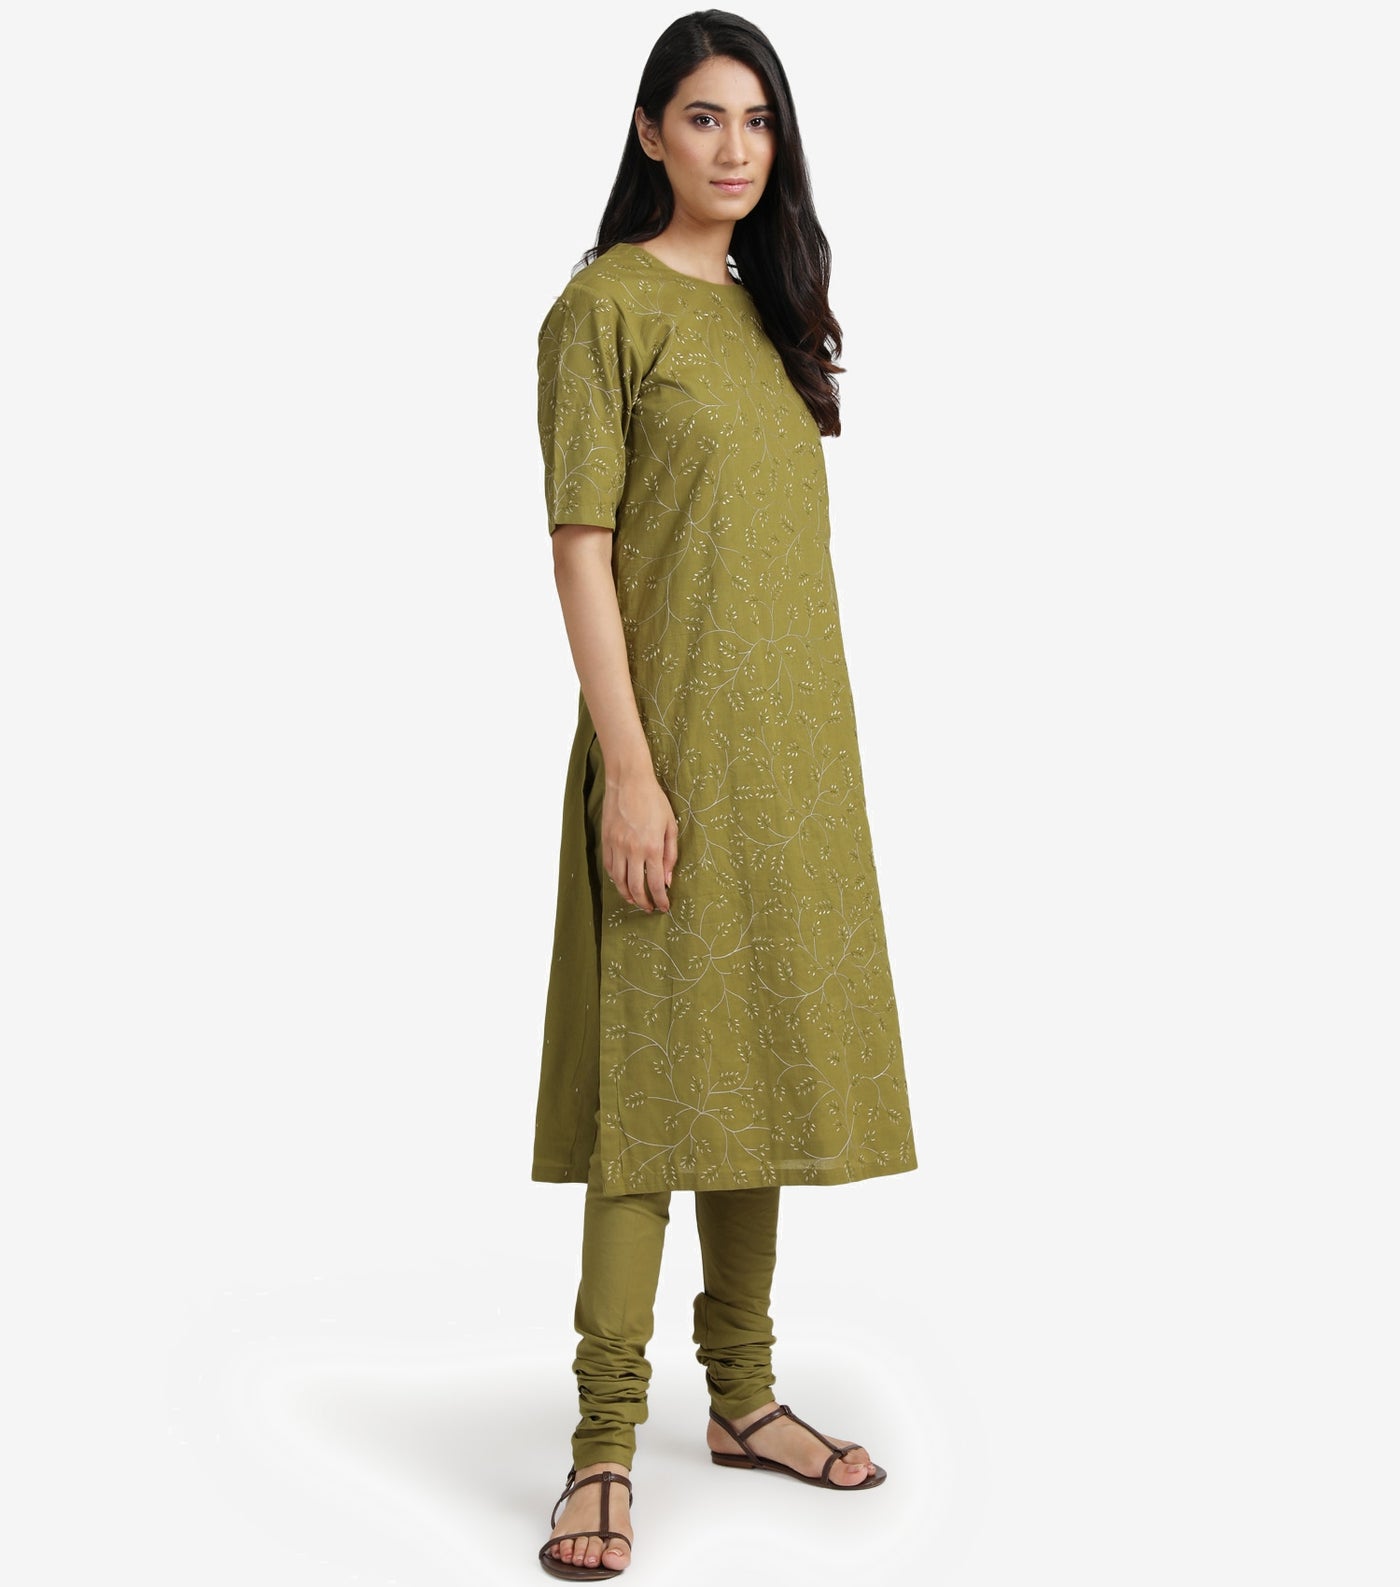 Olive Green embroidered cotton kurta & churidaar set